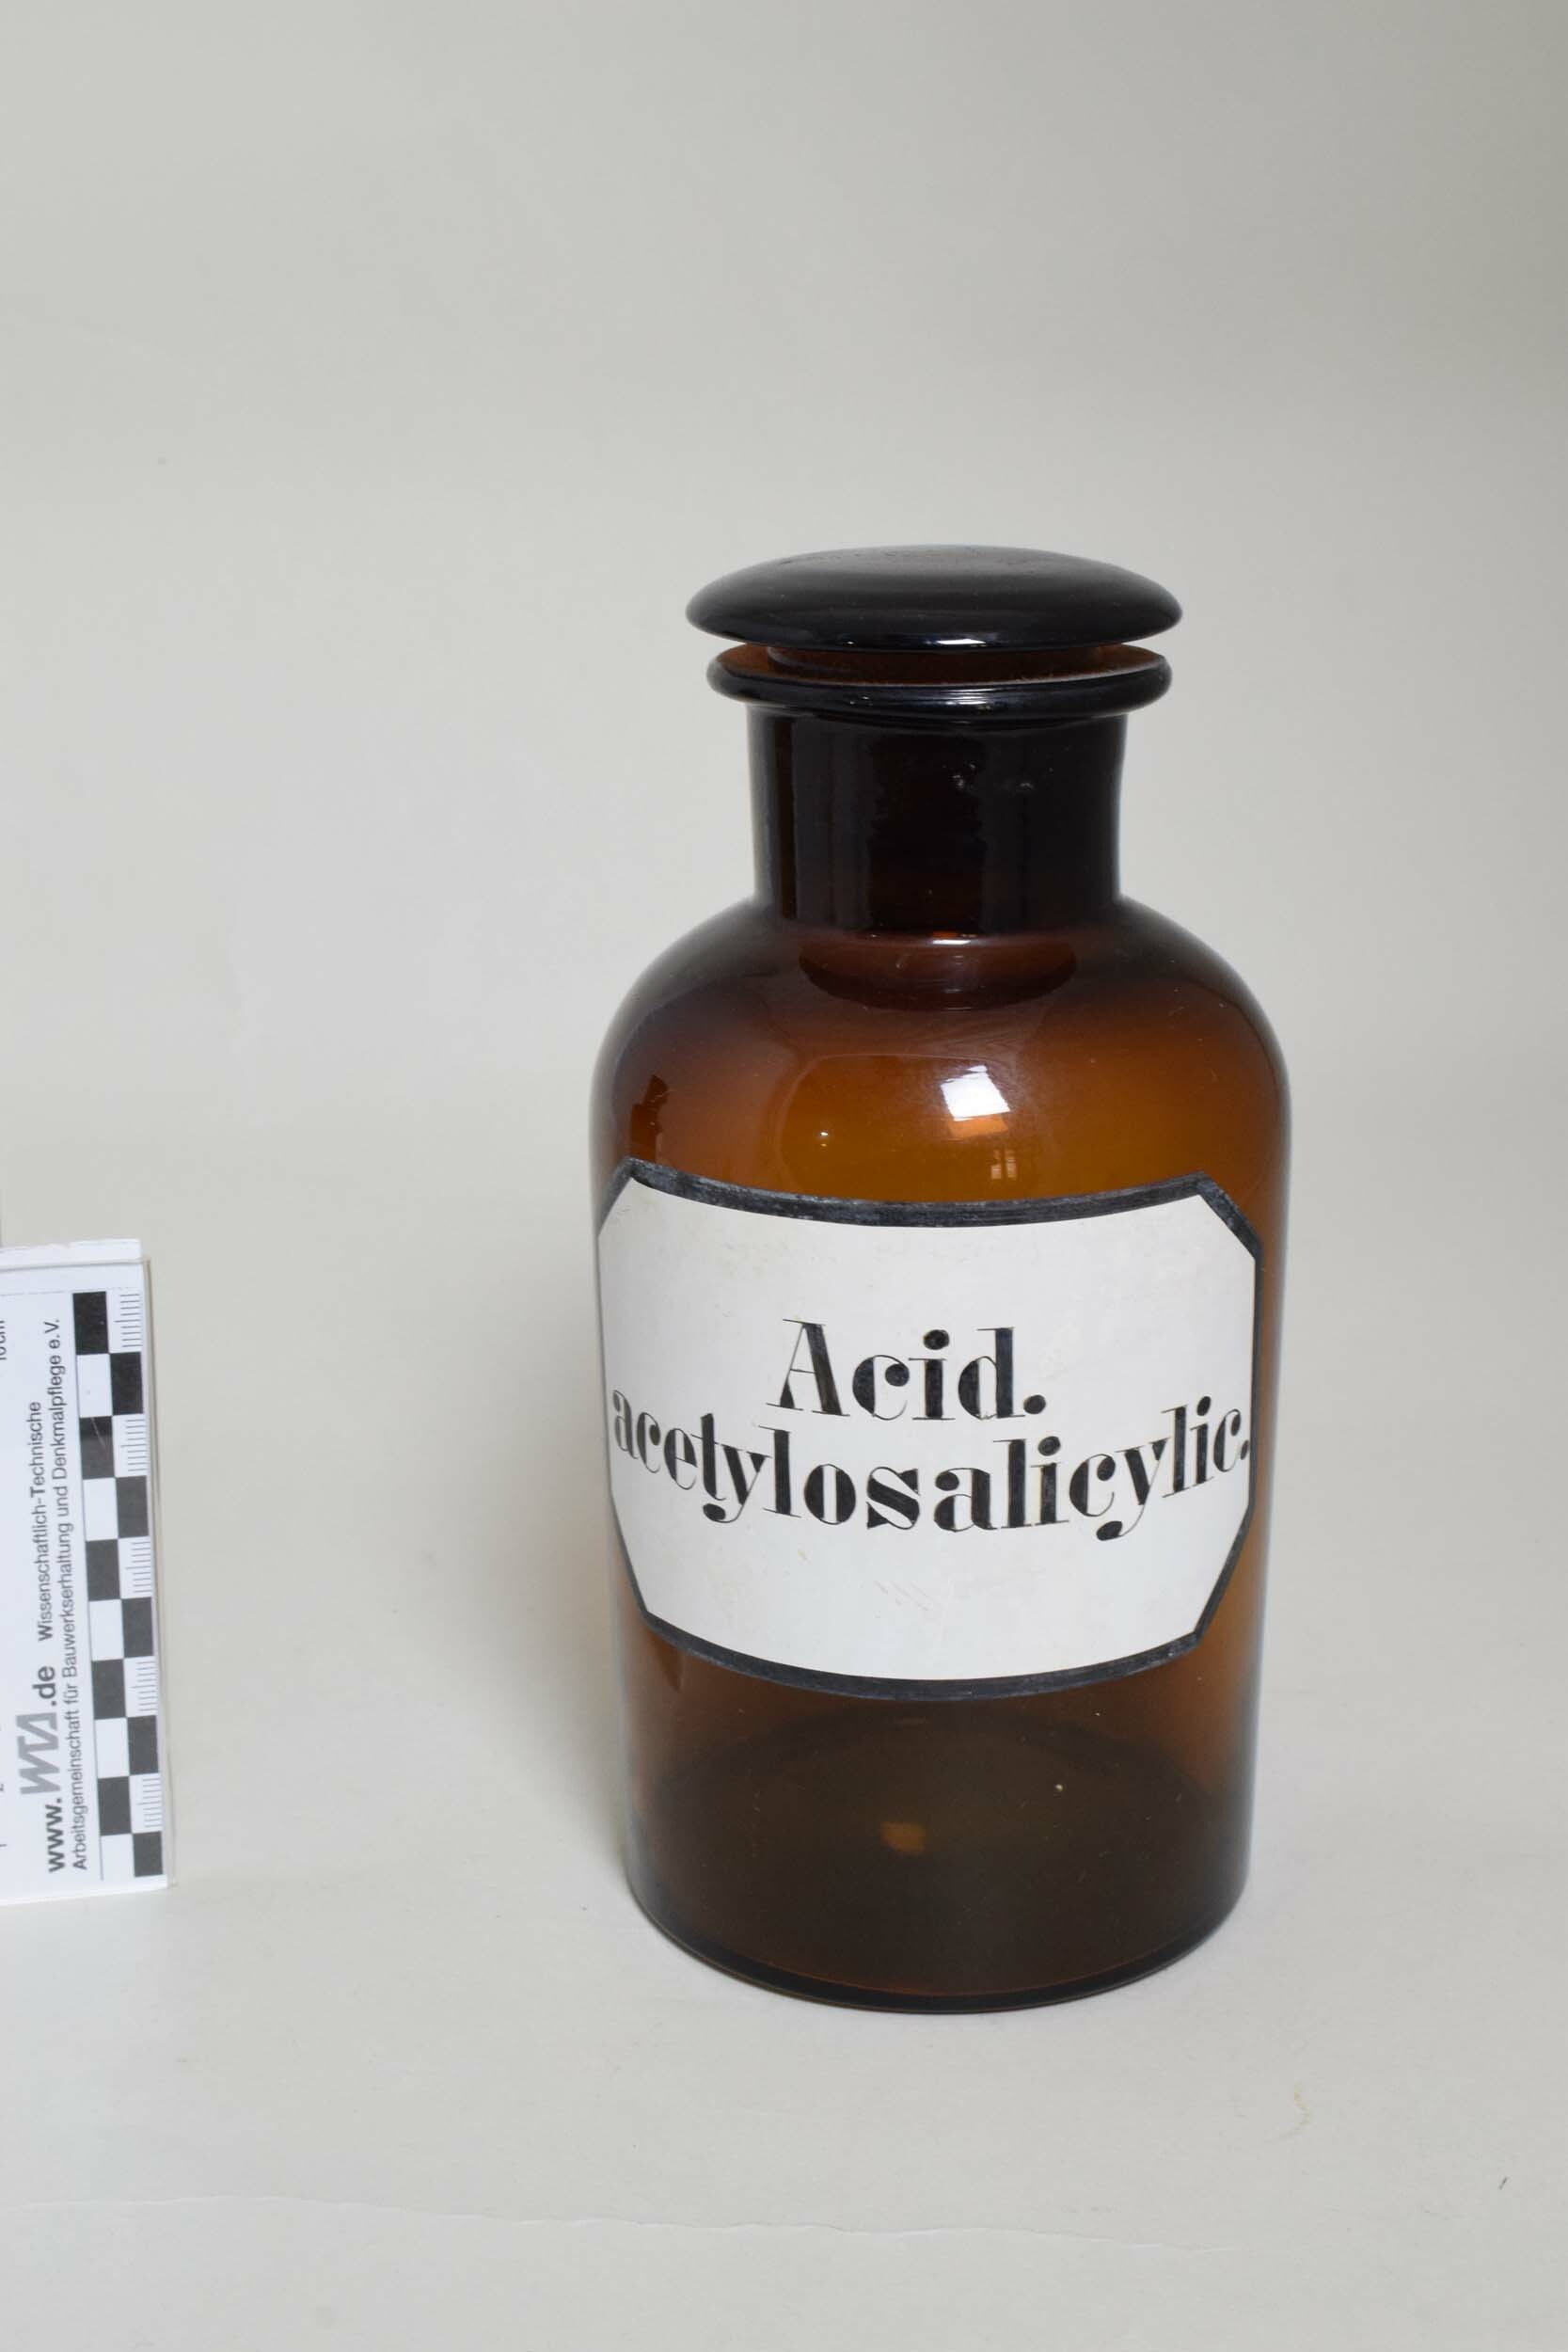 Apothekenflasche "Acid. acetylosalicylic." (Heimatmuseum Dohna CC BY-NC-SA)